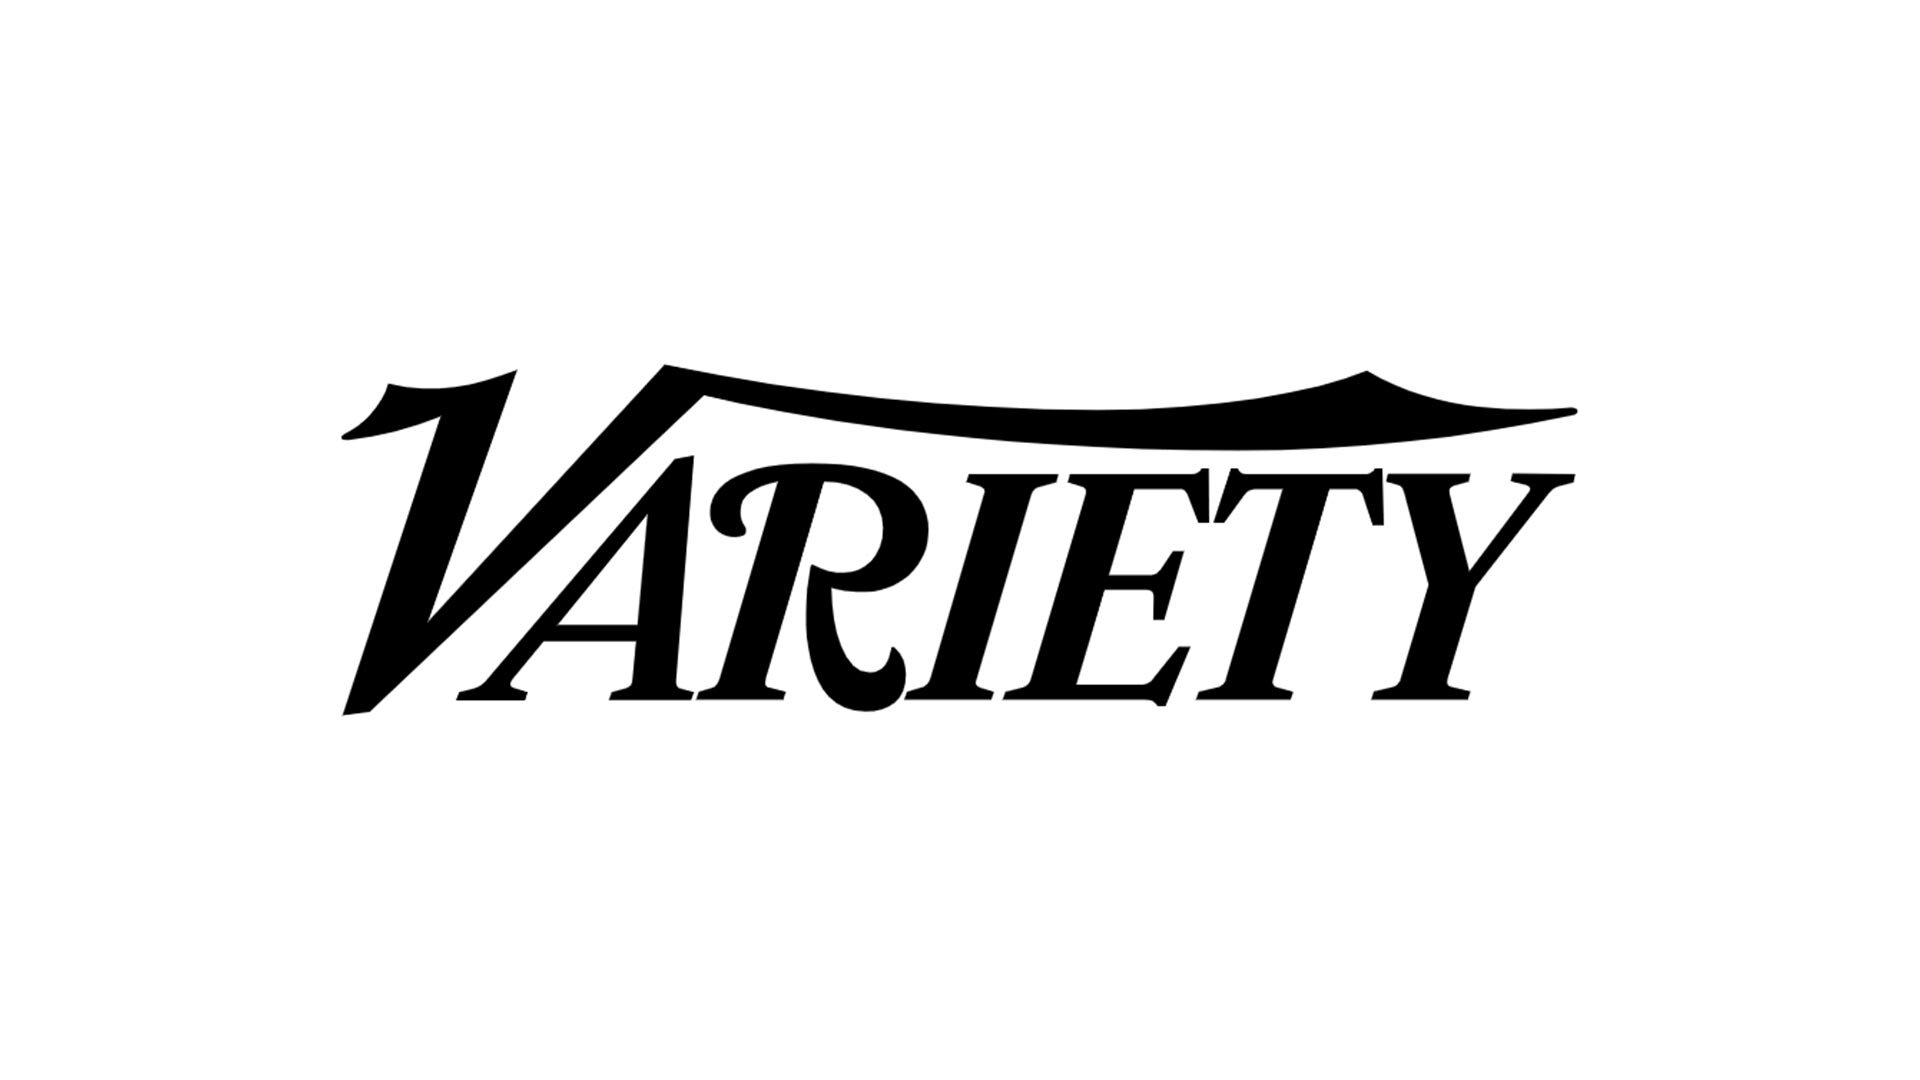 variety-logo.jpg